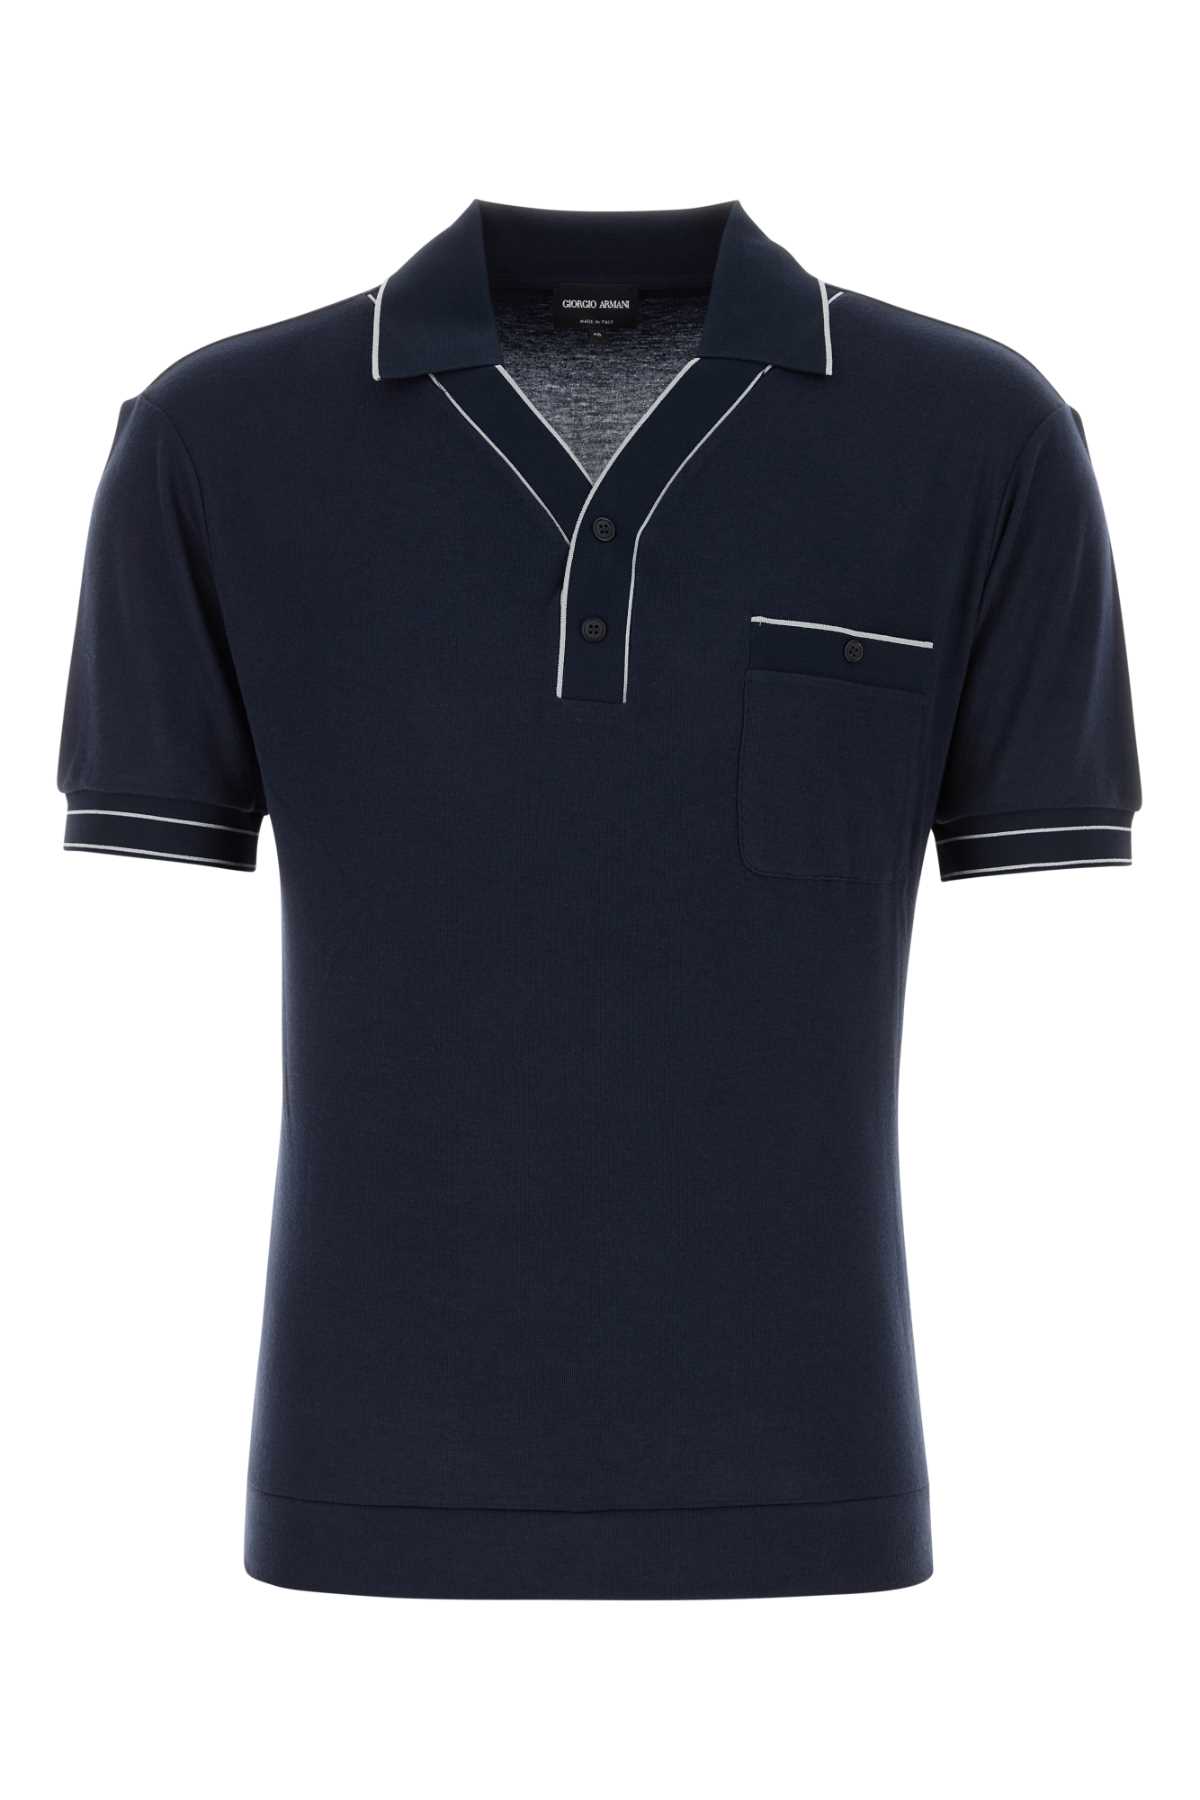 Giorgio Armani Midnight Bue Viscose Blend Polo Shirt